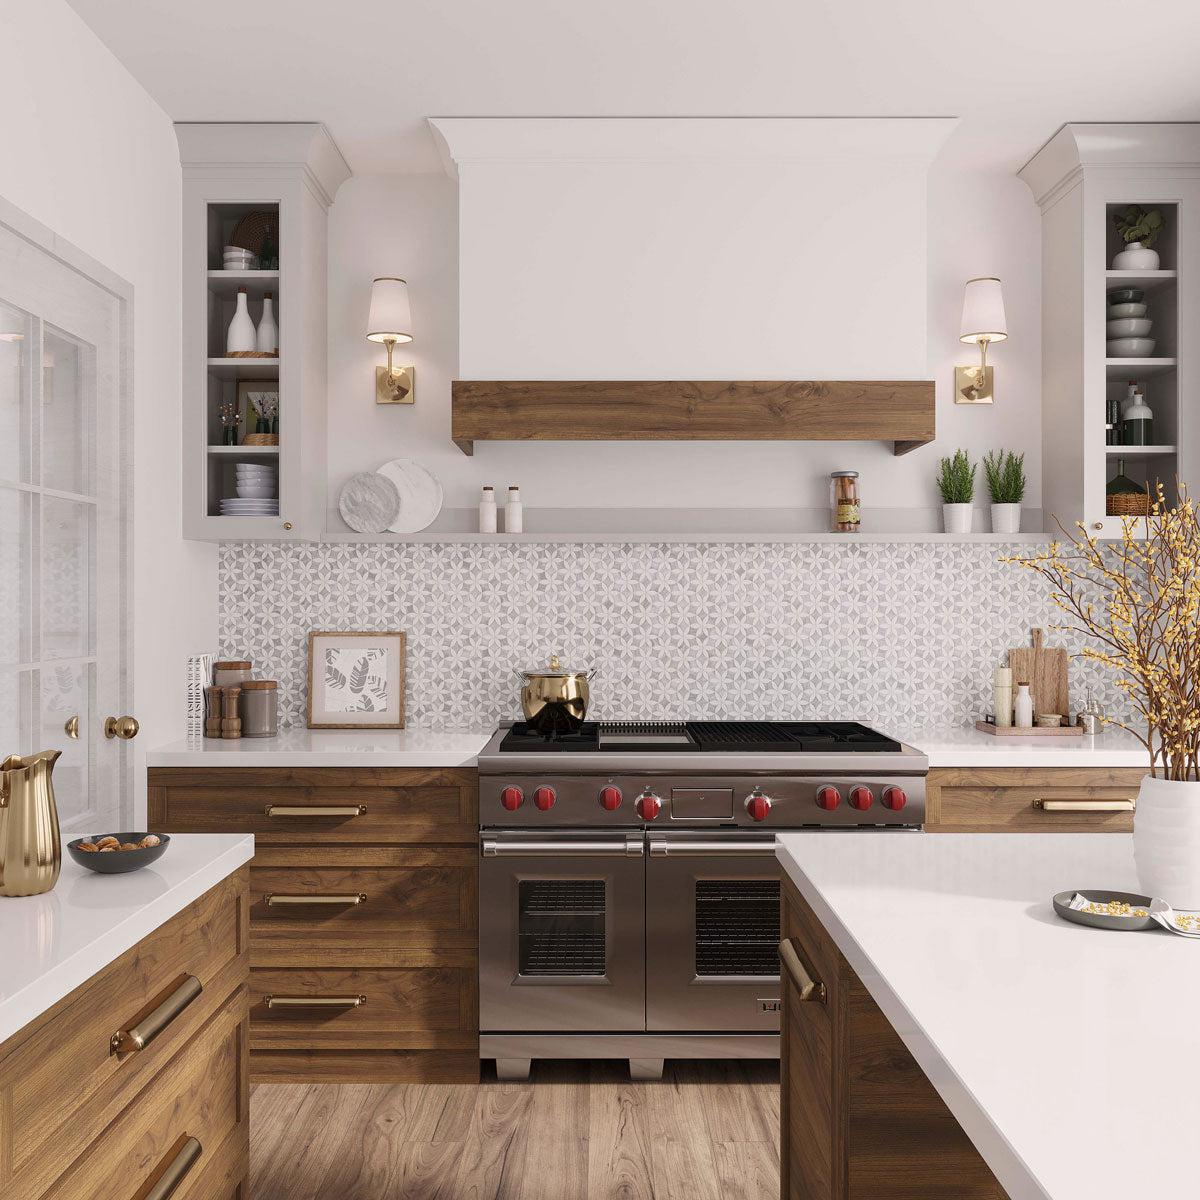 White and wood kitchen with Roman Flower Bardiglio & Carrara Marble Mosaic Tile backsplash under the range hood